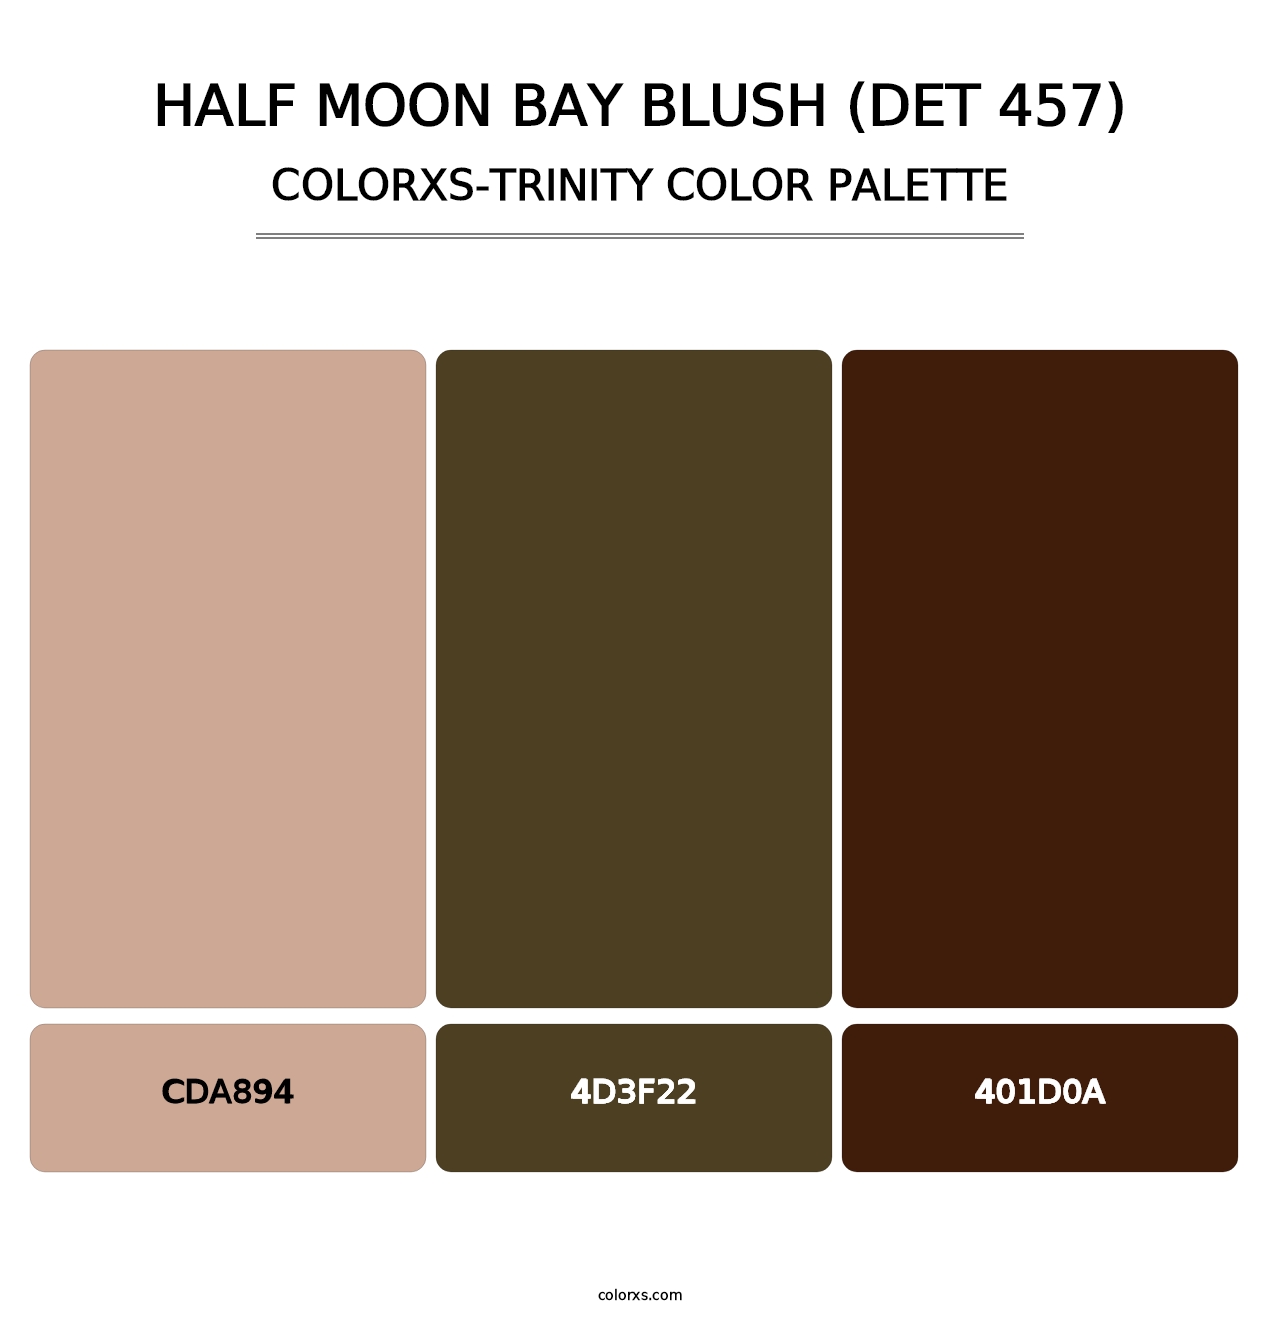 Half Moon Bay Blush (DET 457) - Colorxs Trinity Palette